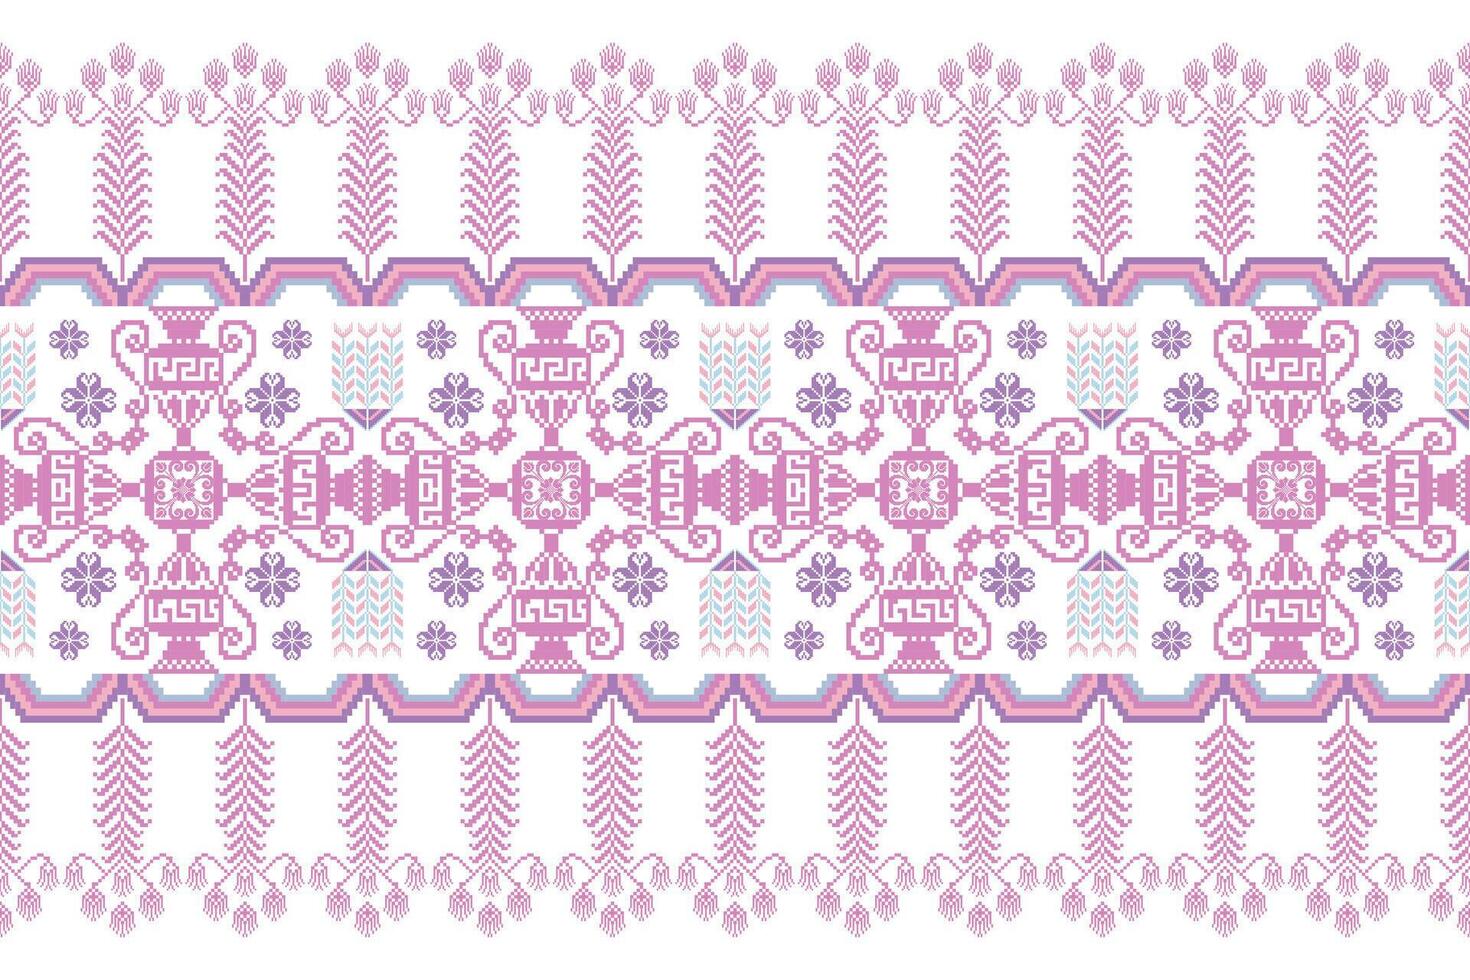 blommig pixel konst mönster på vit bakgrund.geometrisk etnisk orientalisk broderi vektor illustration.pixel stil, abstrakt bakgrund, kors stitch.design för textur, tyg, tyg, halsduk, tabell löpare.